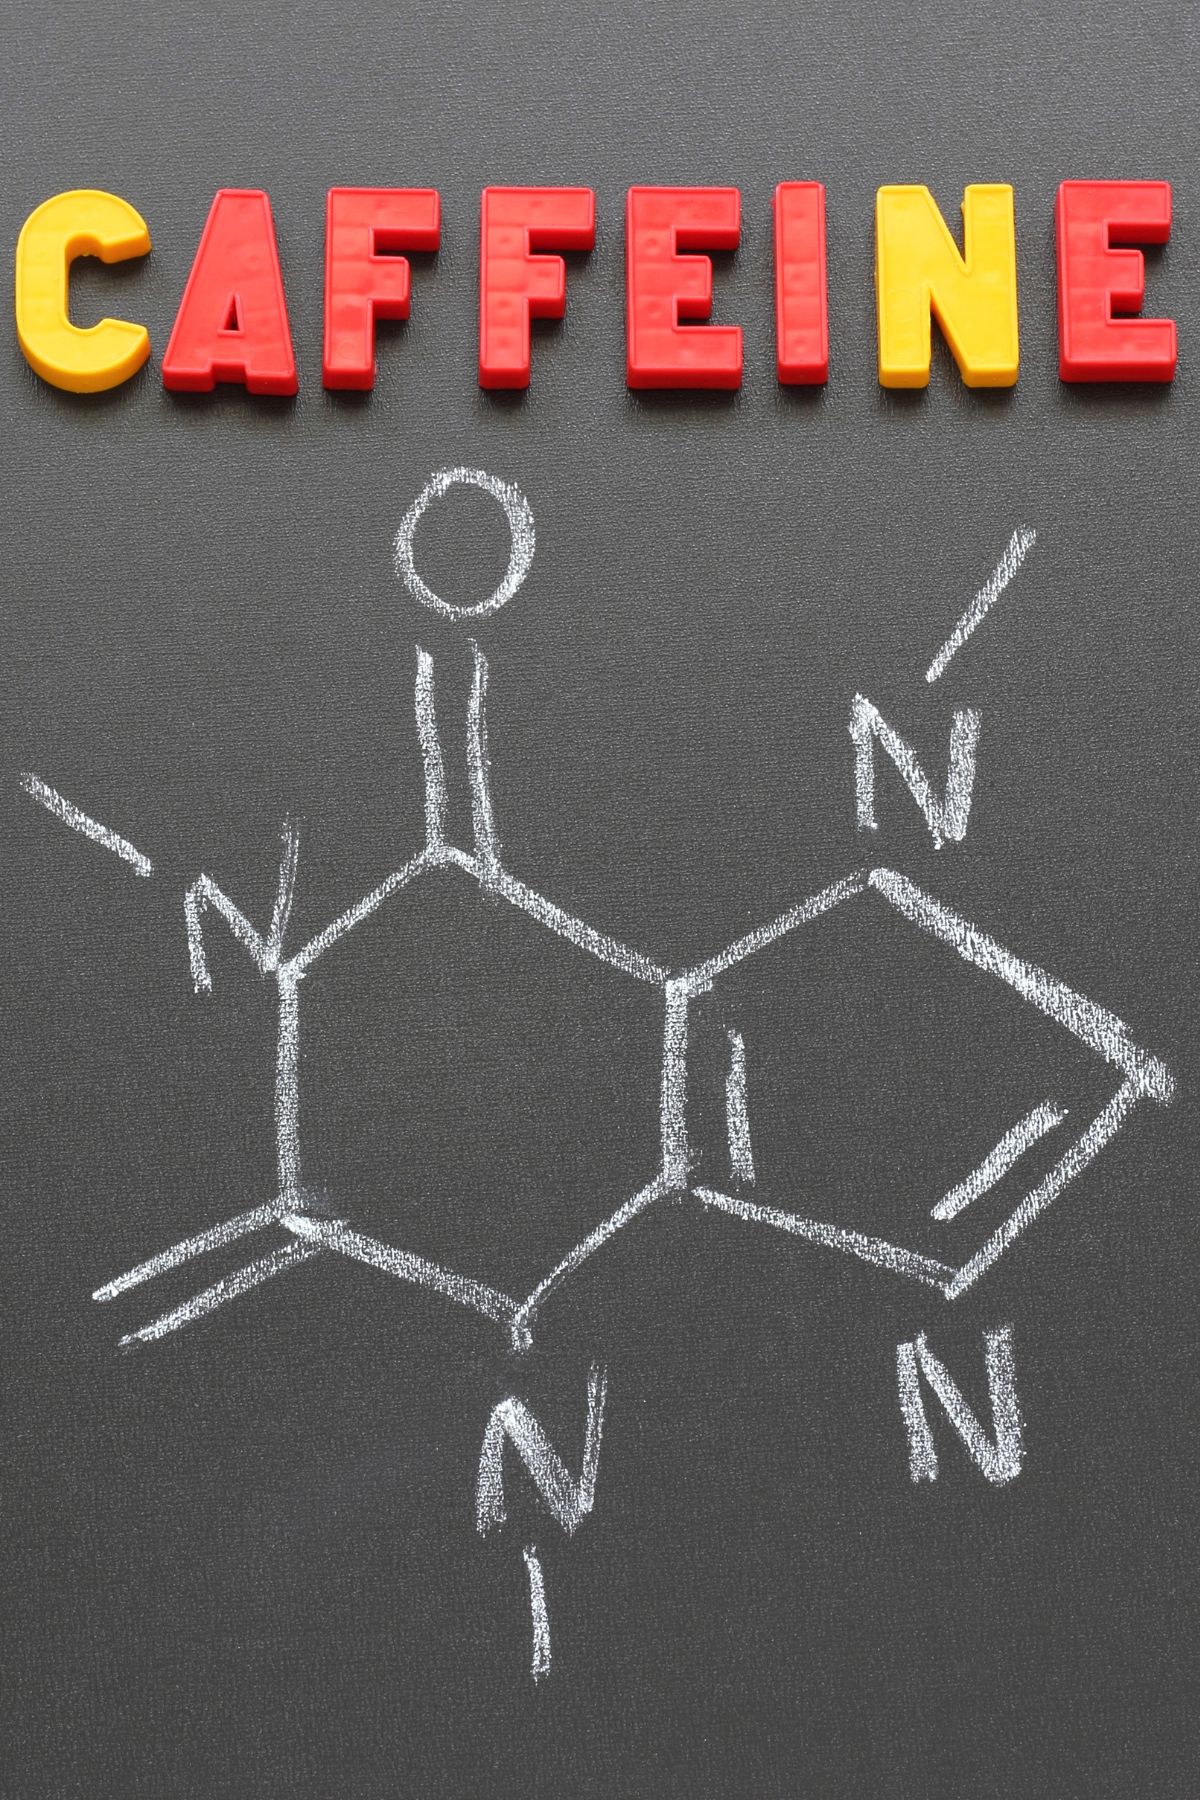 the chemical formula for caffeine on a blackboard.